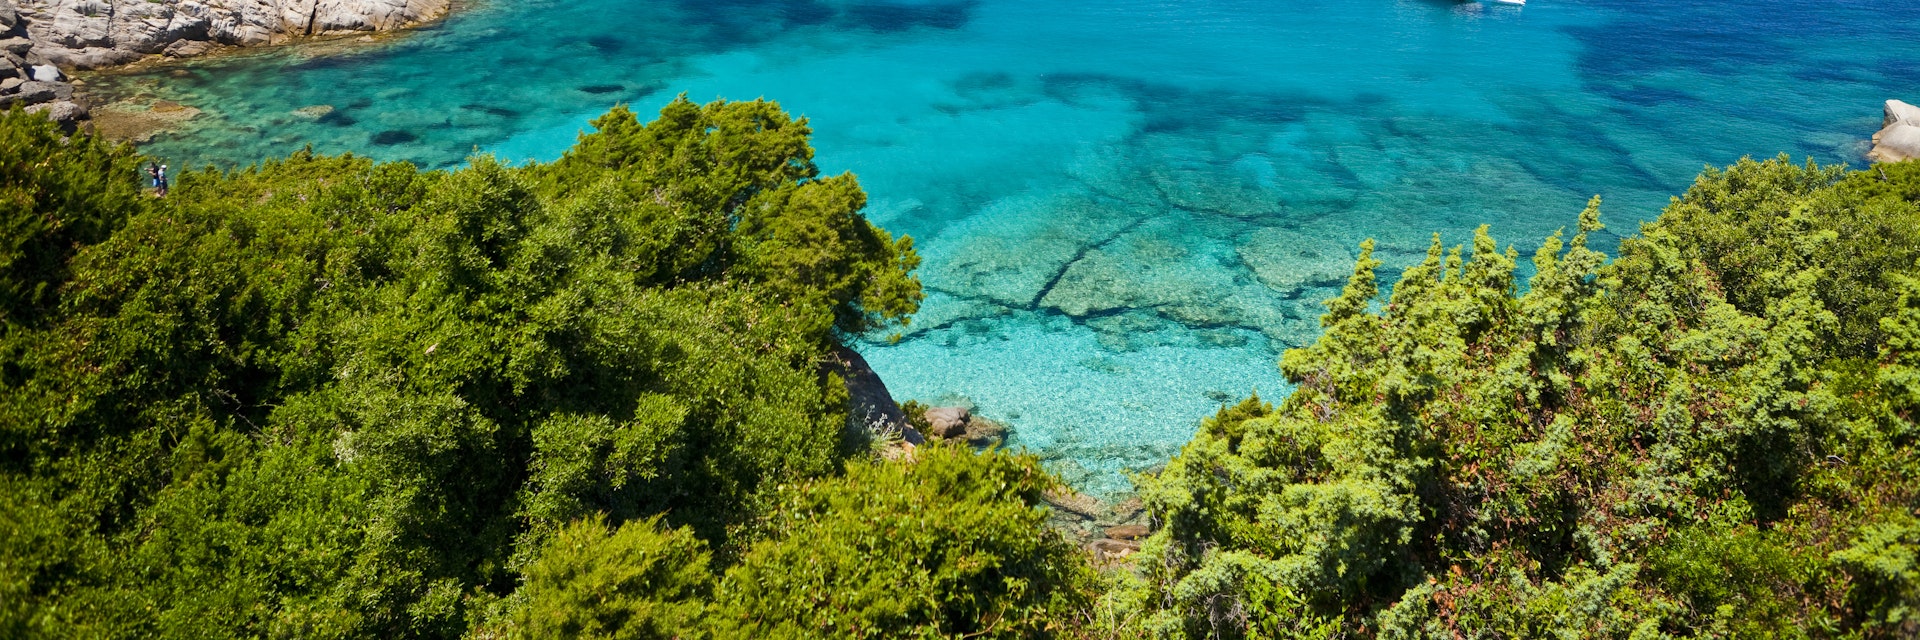 Italy, Sardinia, Province of Olbia-Tempio, Santa Teresa Gallura, Capo Testa, granite peninsula